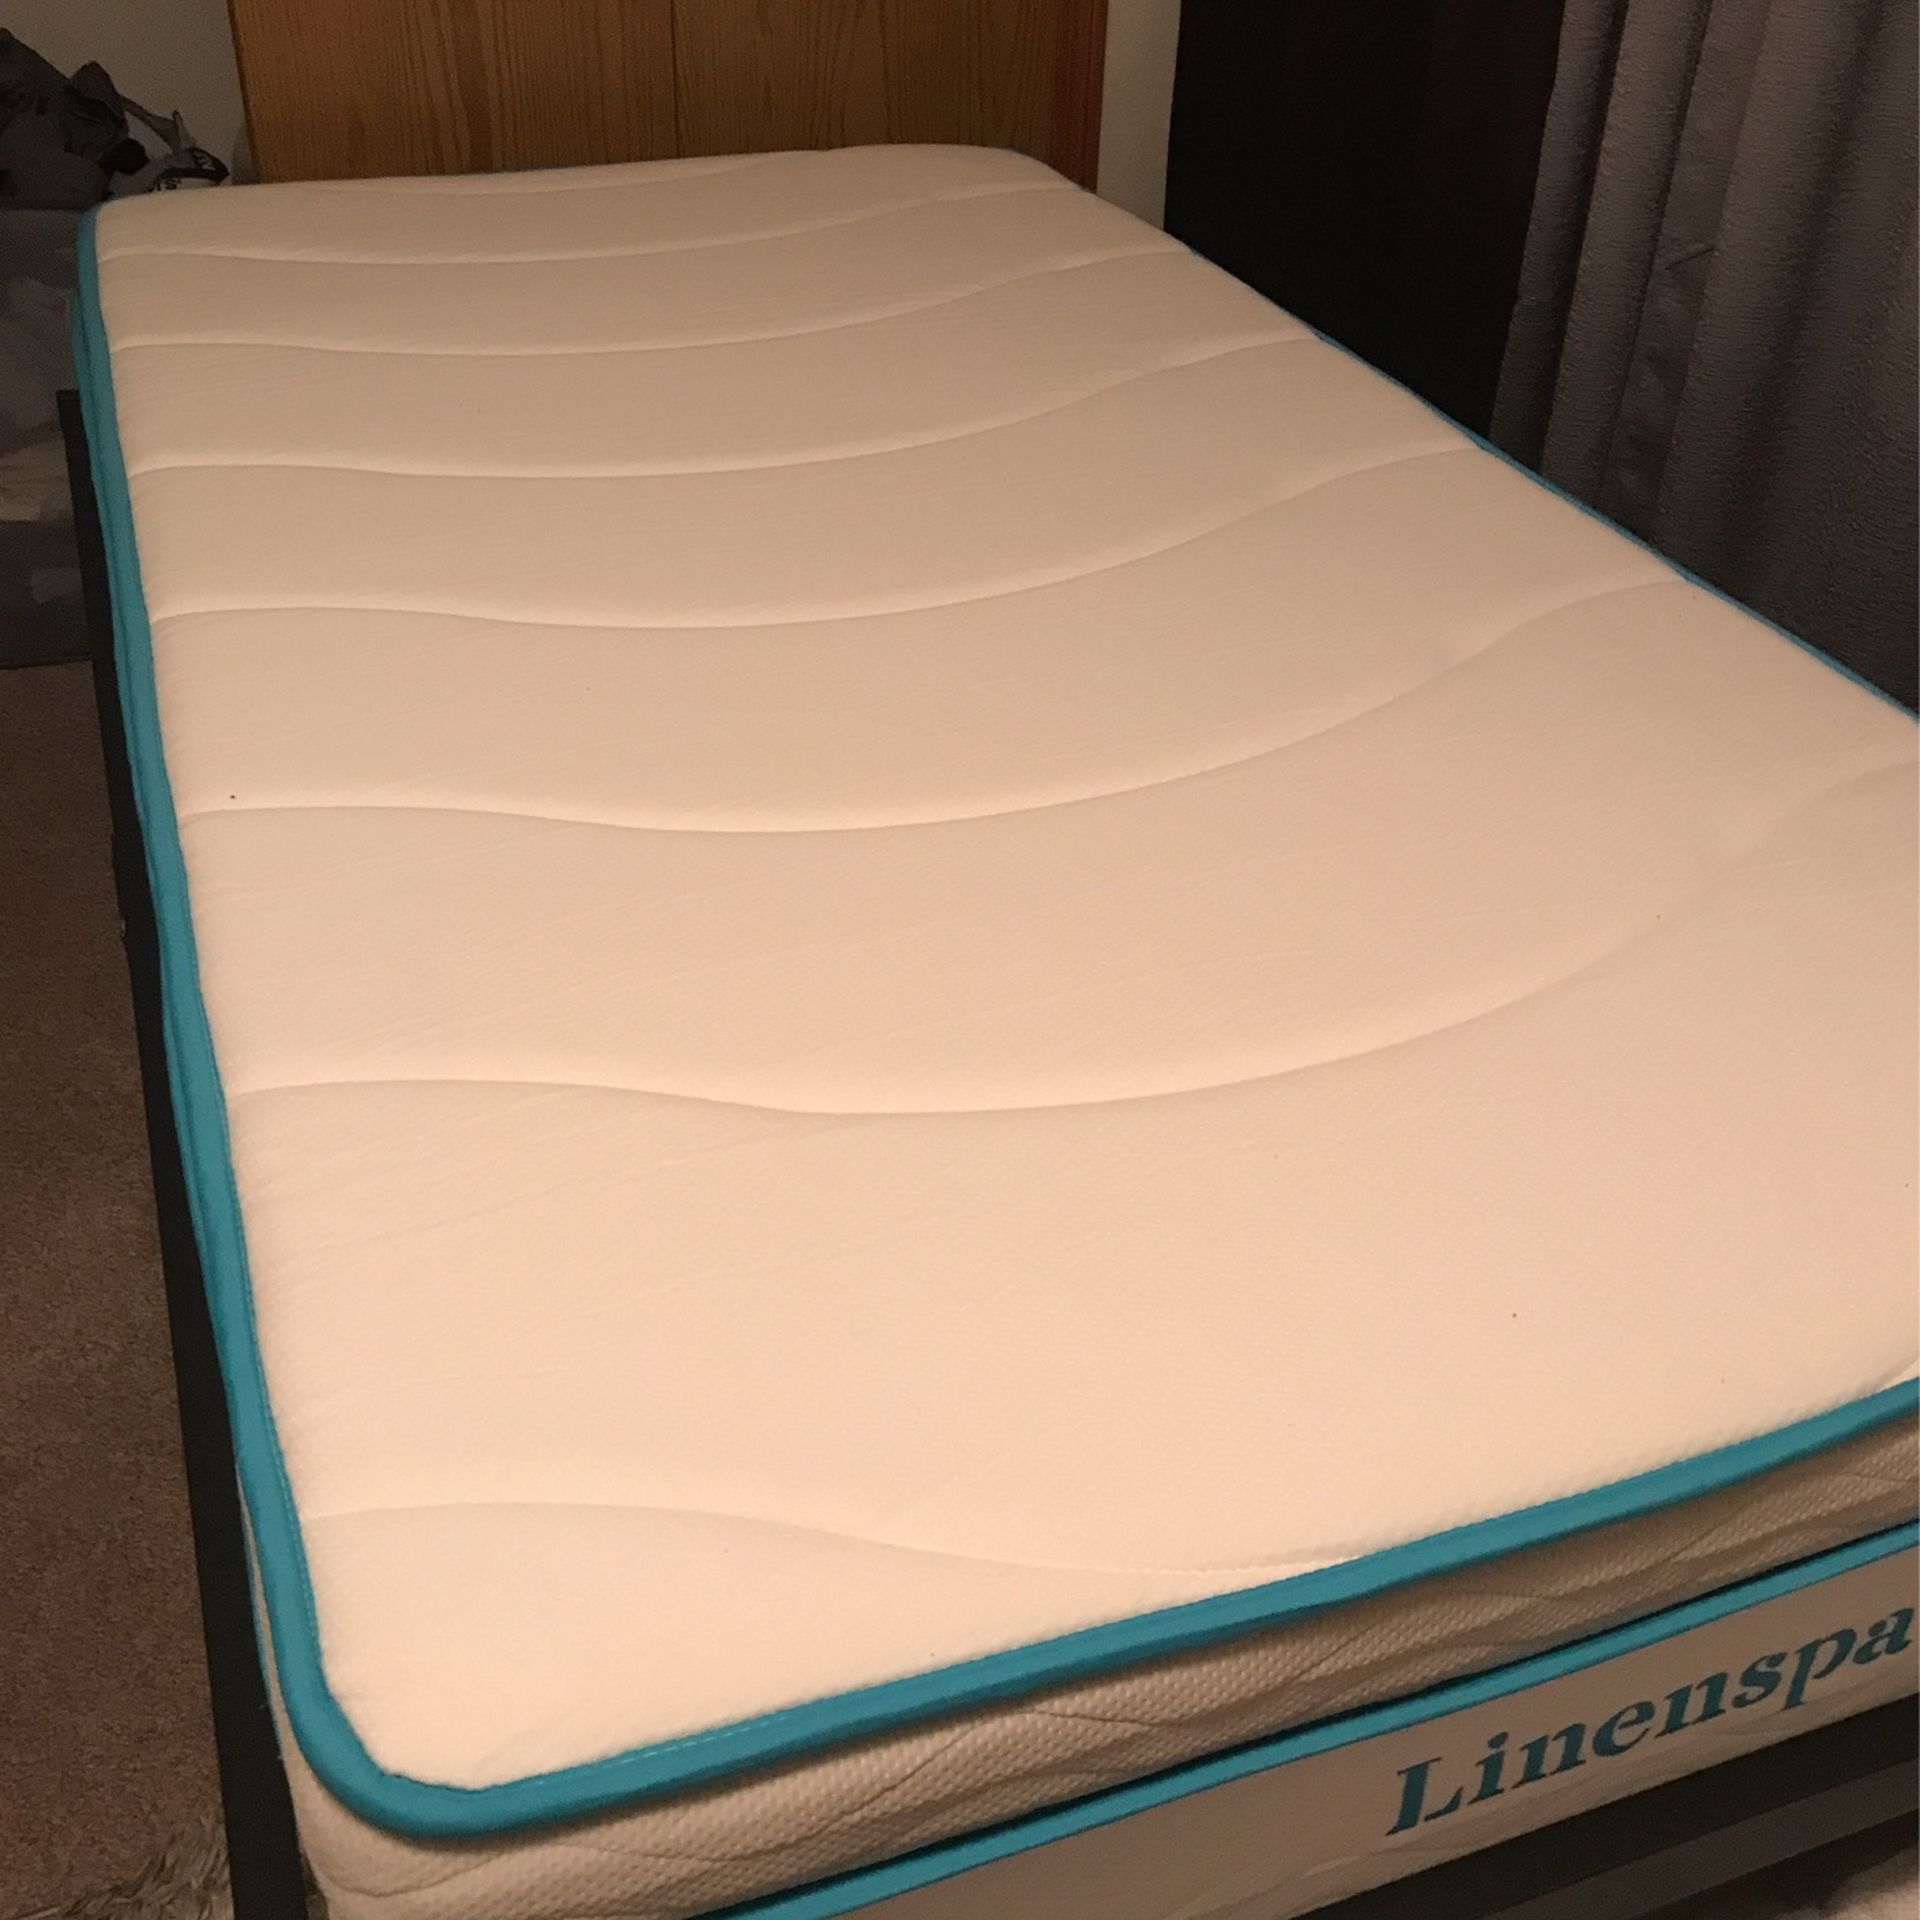 Linen spa 10in Hybrid Bed W/frame